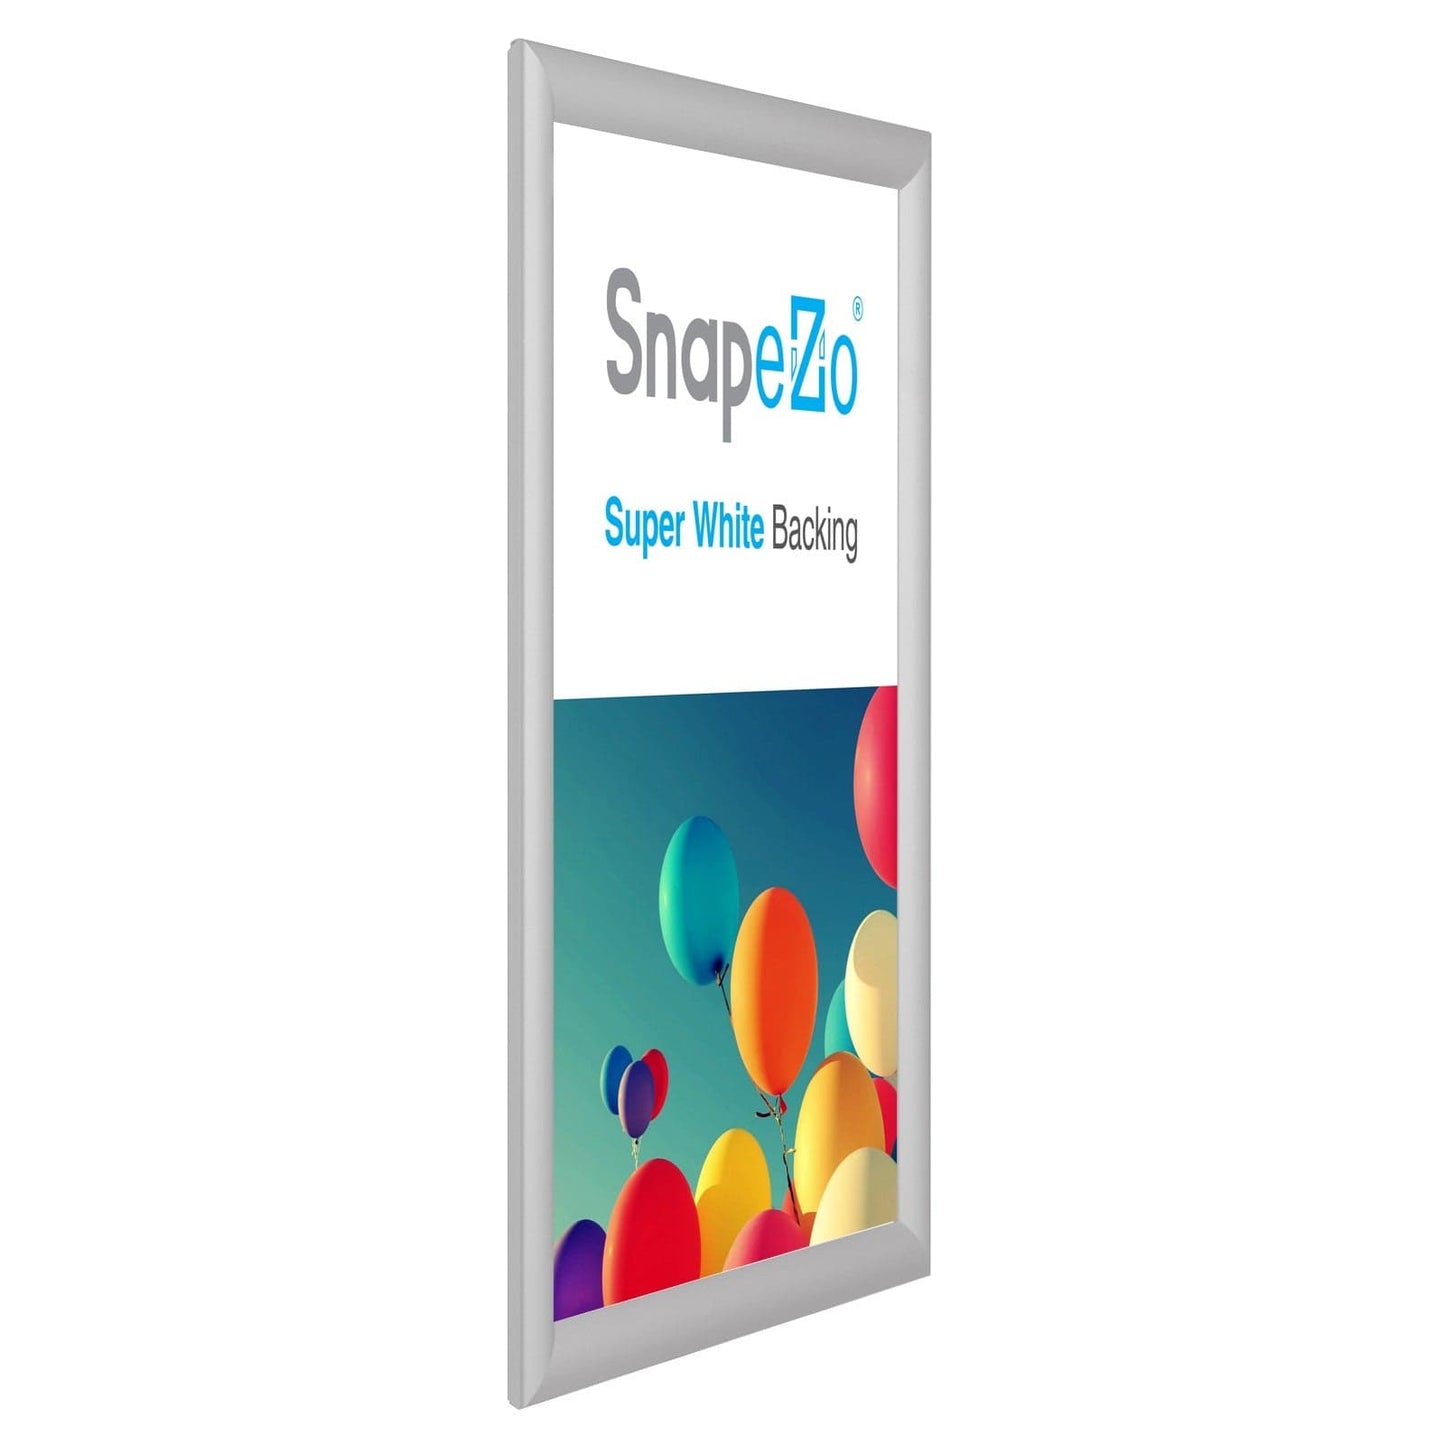 17x24 Silver SnapeZo® Snap Frame - 1" Profile - Snap Frames Direct